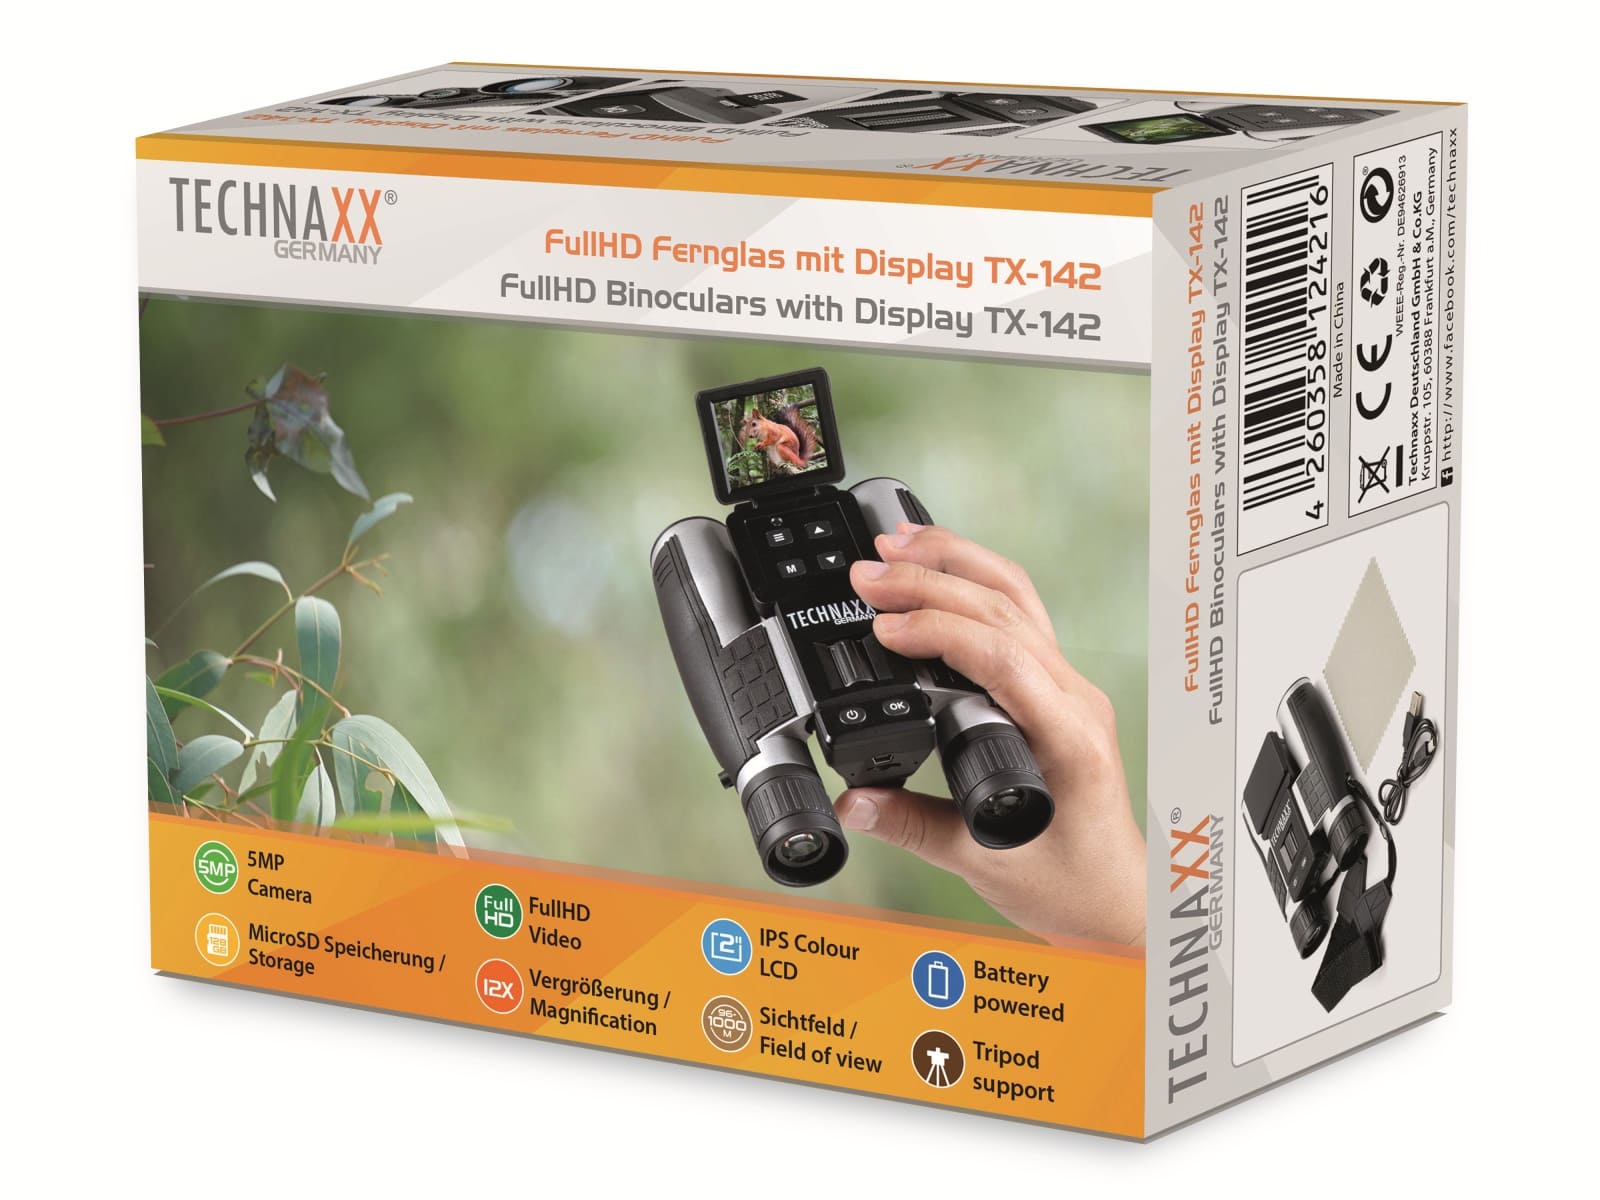 TECHNAXX Fernglas TX-142, Full-HD, 4-fach Zoom und Farbdisplay